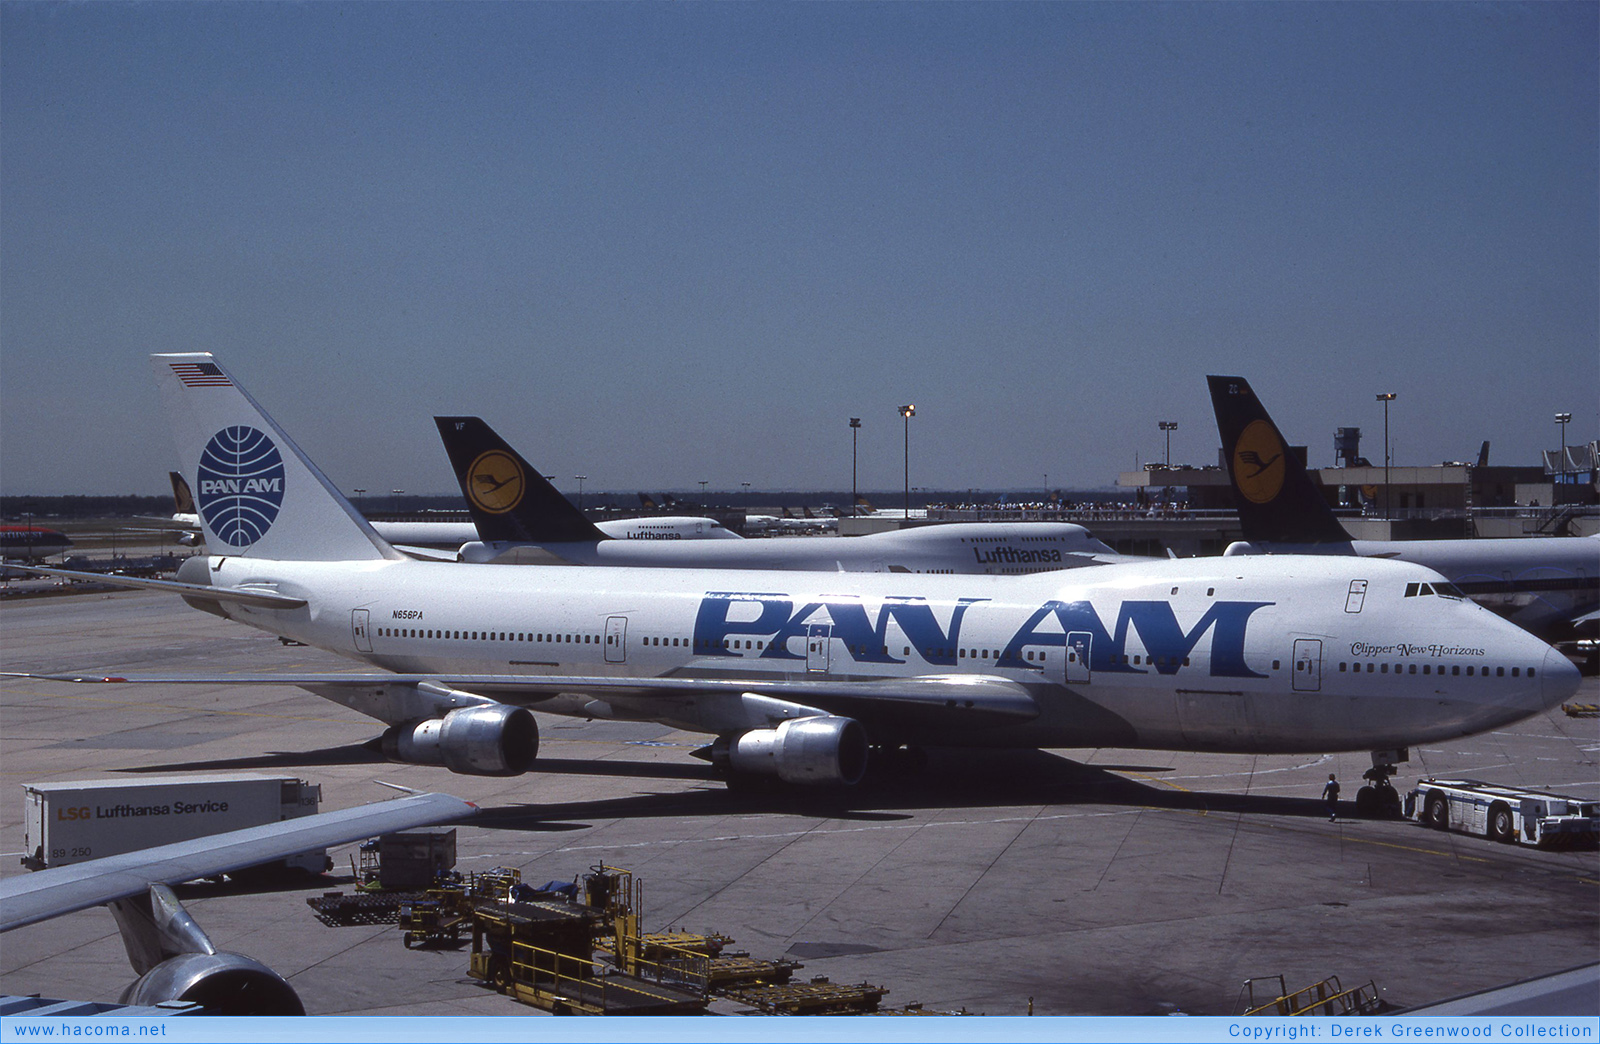 Foto von N656PA - Pan Am Clipper Live Yankee / Empress of the Seas / New Horizons - Flughafen Frankfurt am Main